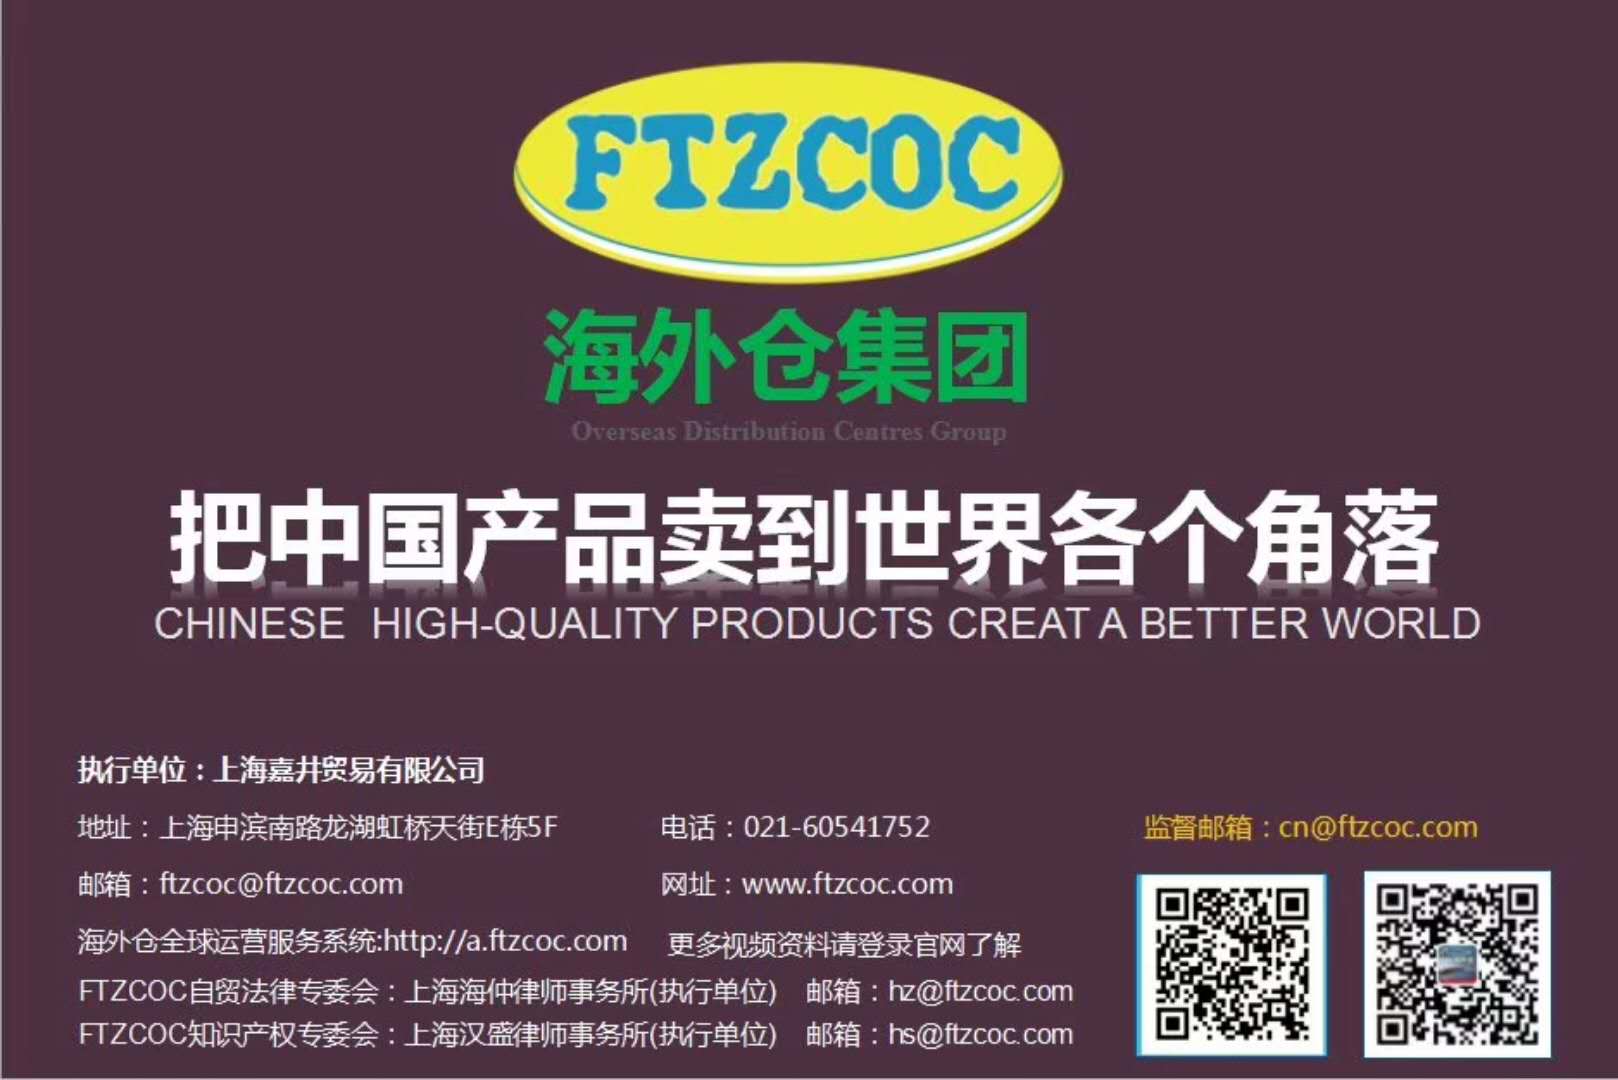 FTZCOC河南企业服务中心与新乡高新区服务业促进局进一步交流